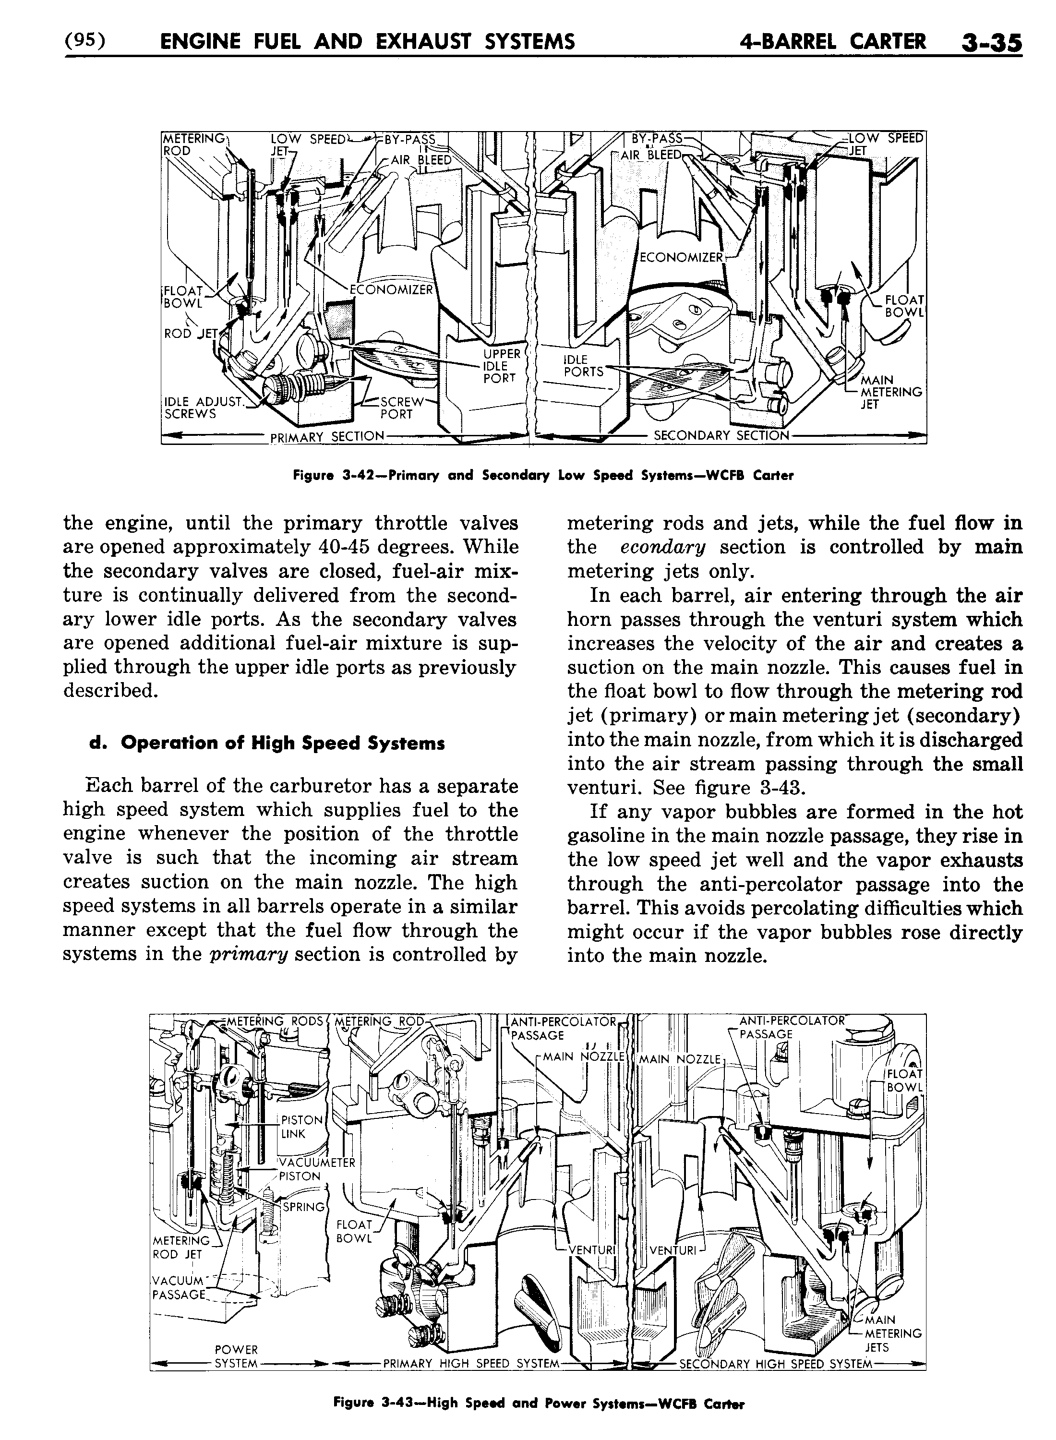 n_04 1955 Buick Shop Manual - Engine Fuel & Exhaust-035-035.jpg